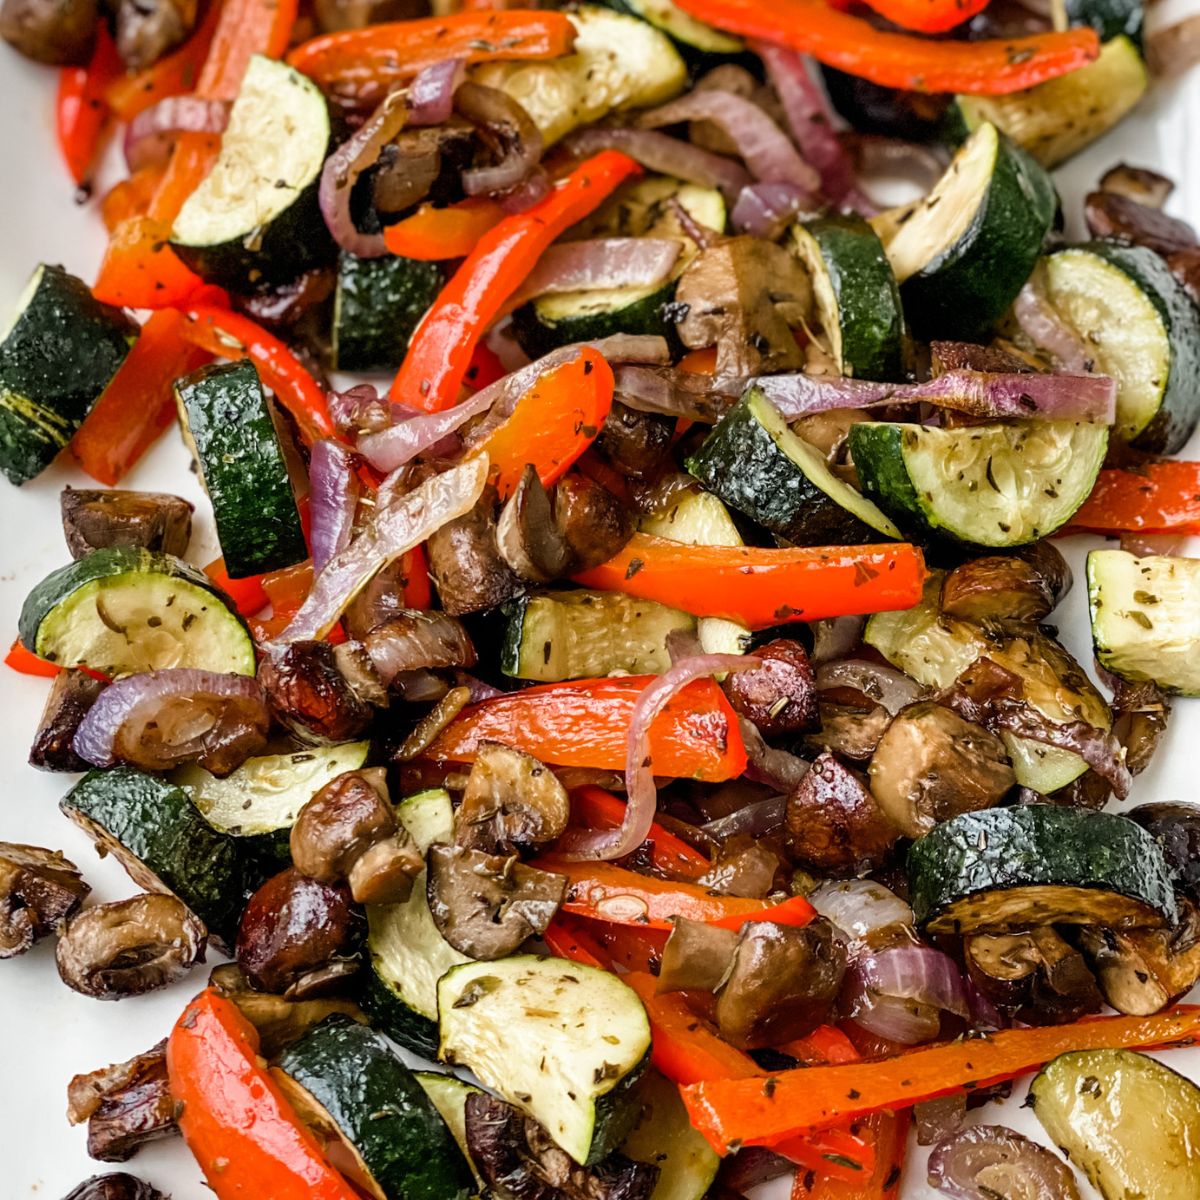 Italian roasted vegetables on a platter.